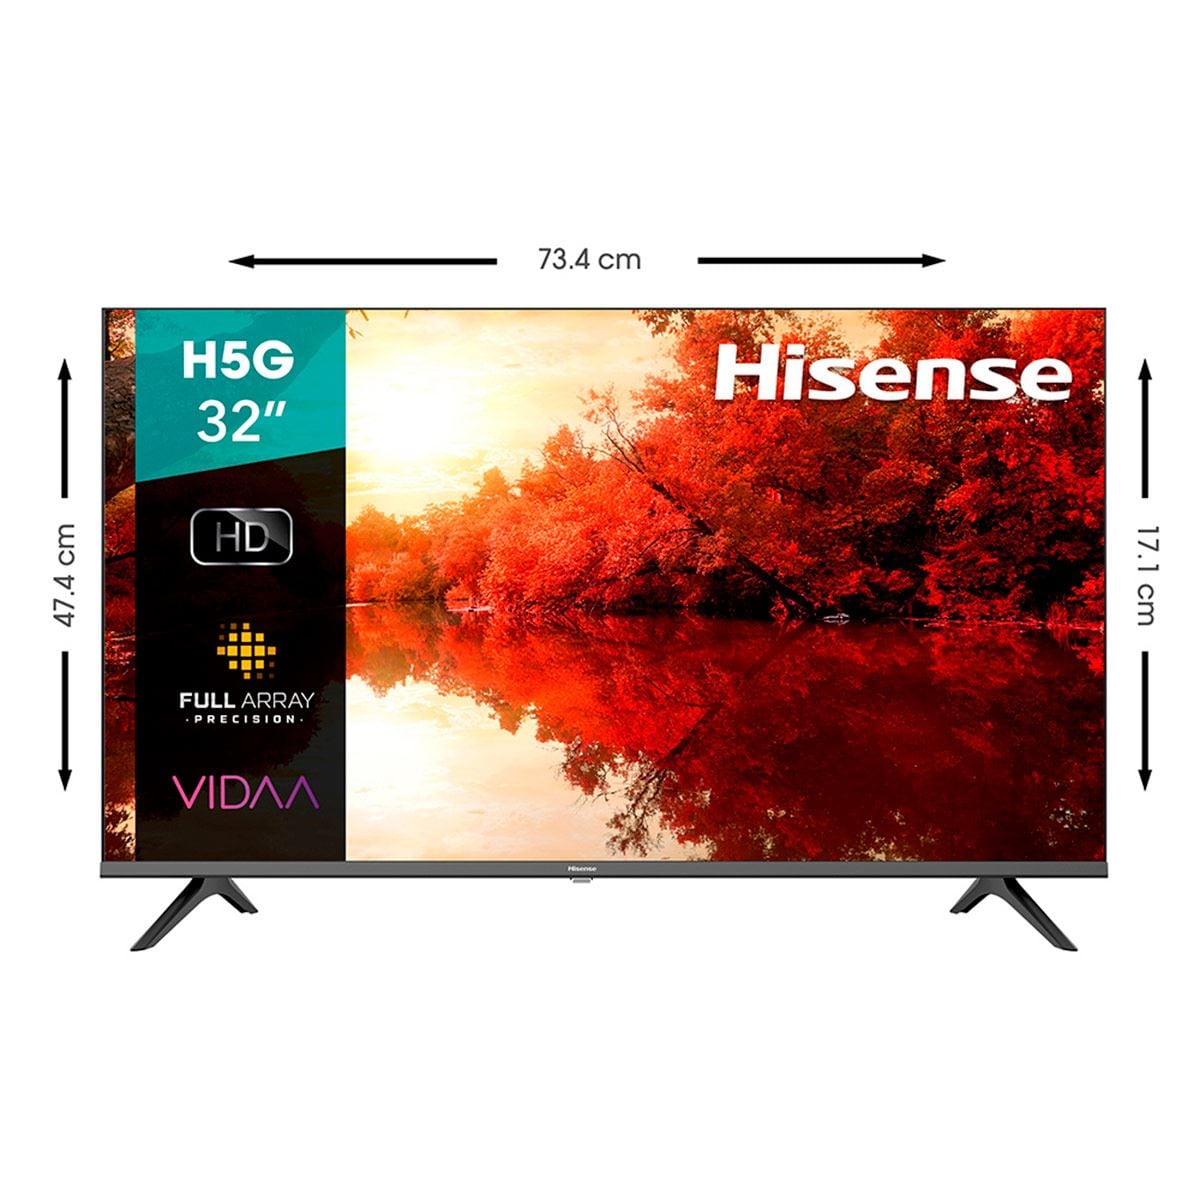 Smart TV HISENSE 32H5G 32 pulgadas Led HD VIDAA Full Array